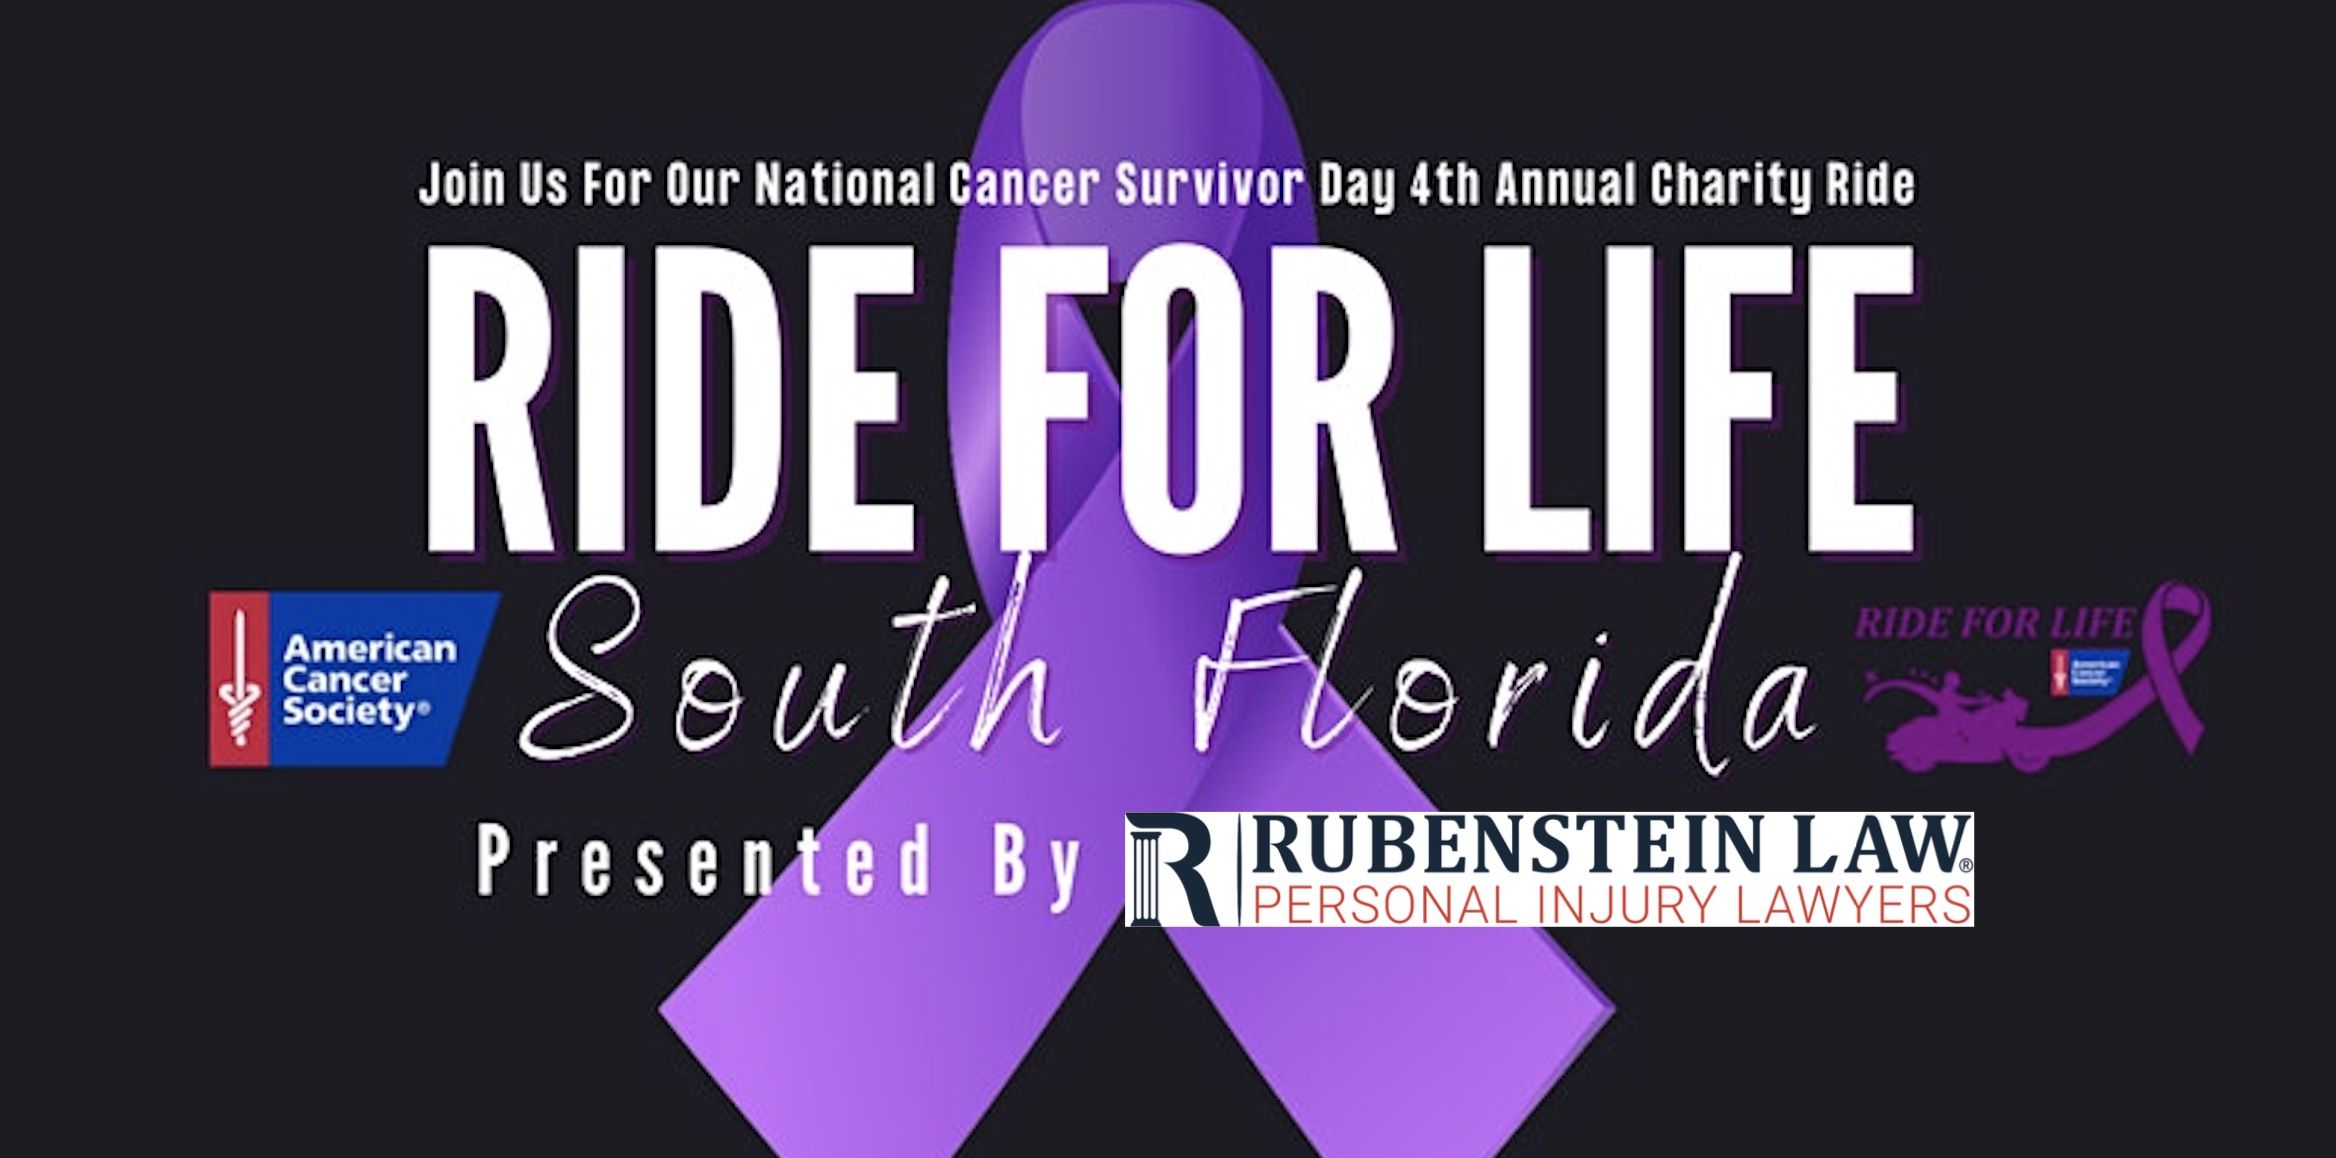 Ride for life purple ribbon logo sponsored by Rubenstein Law